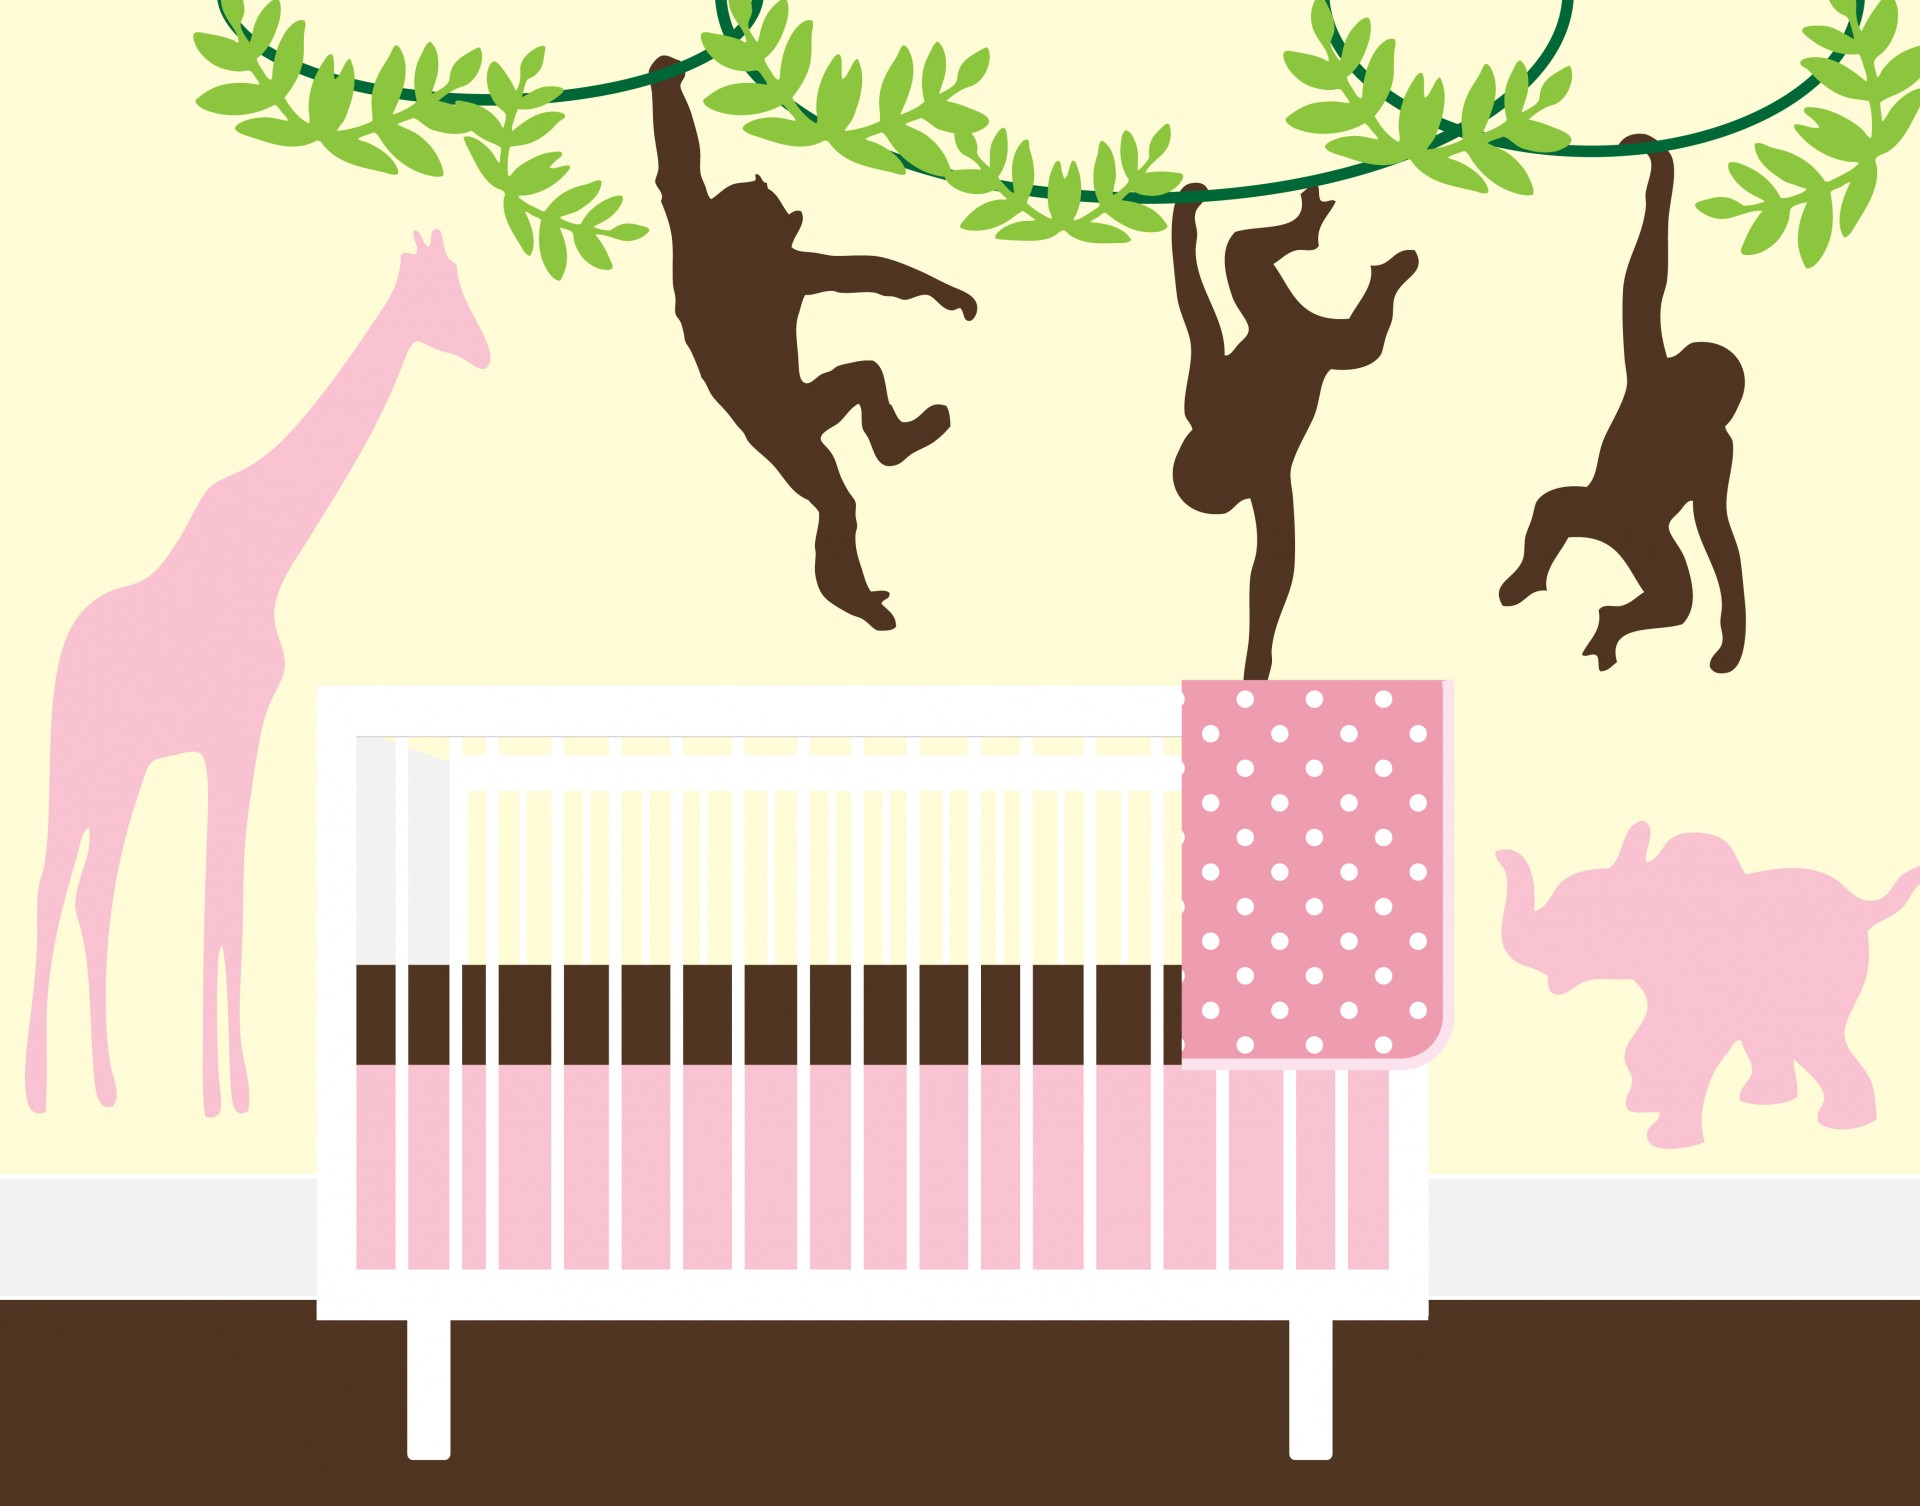 Cute baby girls bedroom or nursery illustration